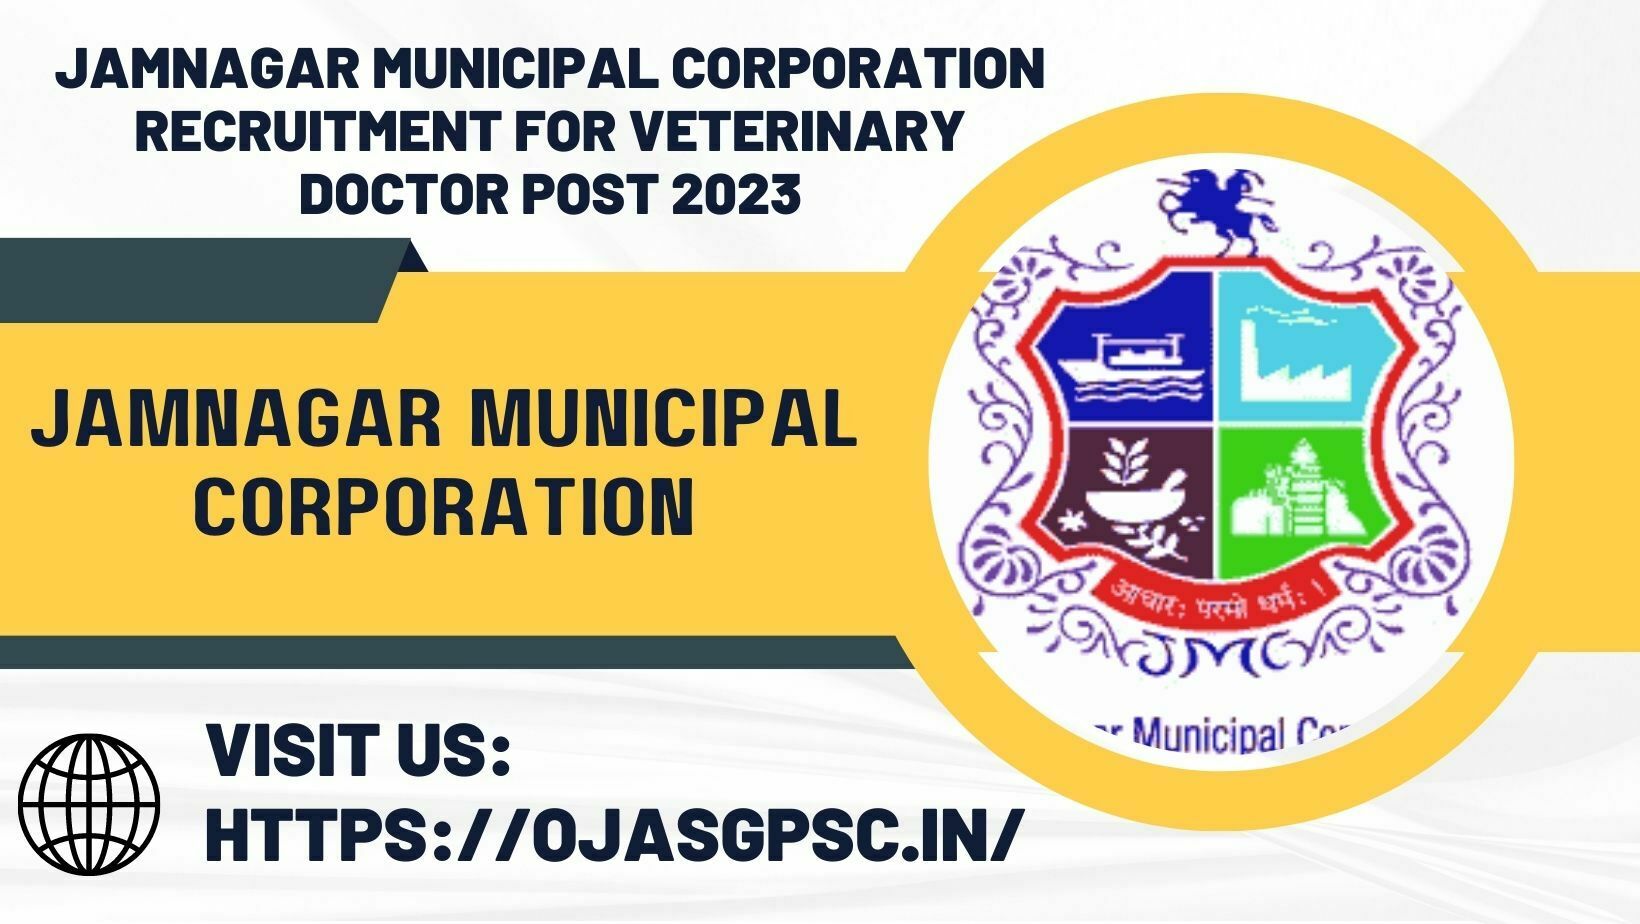 Jamnagar Municipal Corporation (JMC) Recruitment for Veterinary Doctor Post 2023